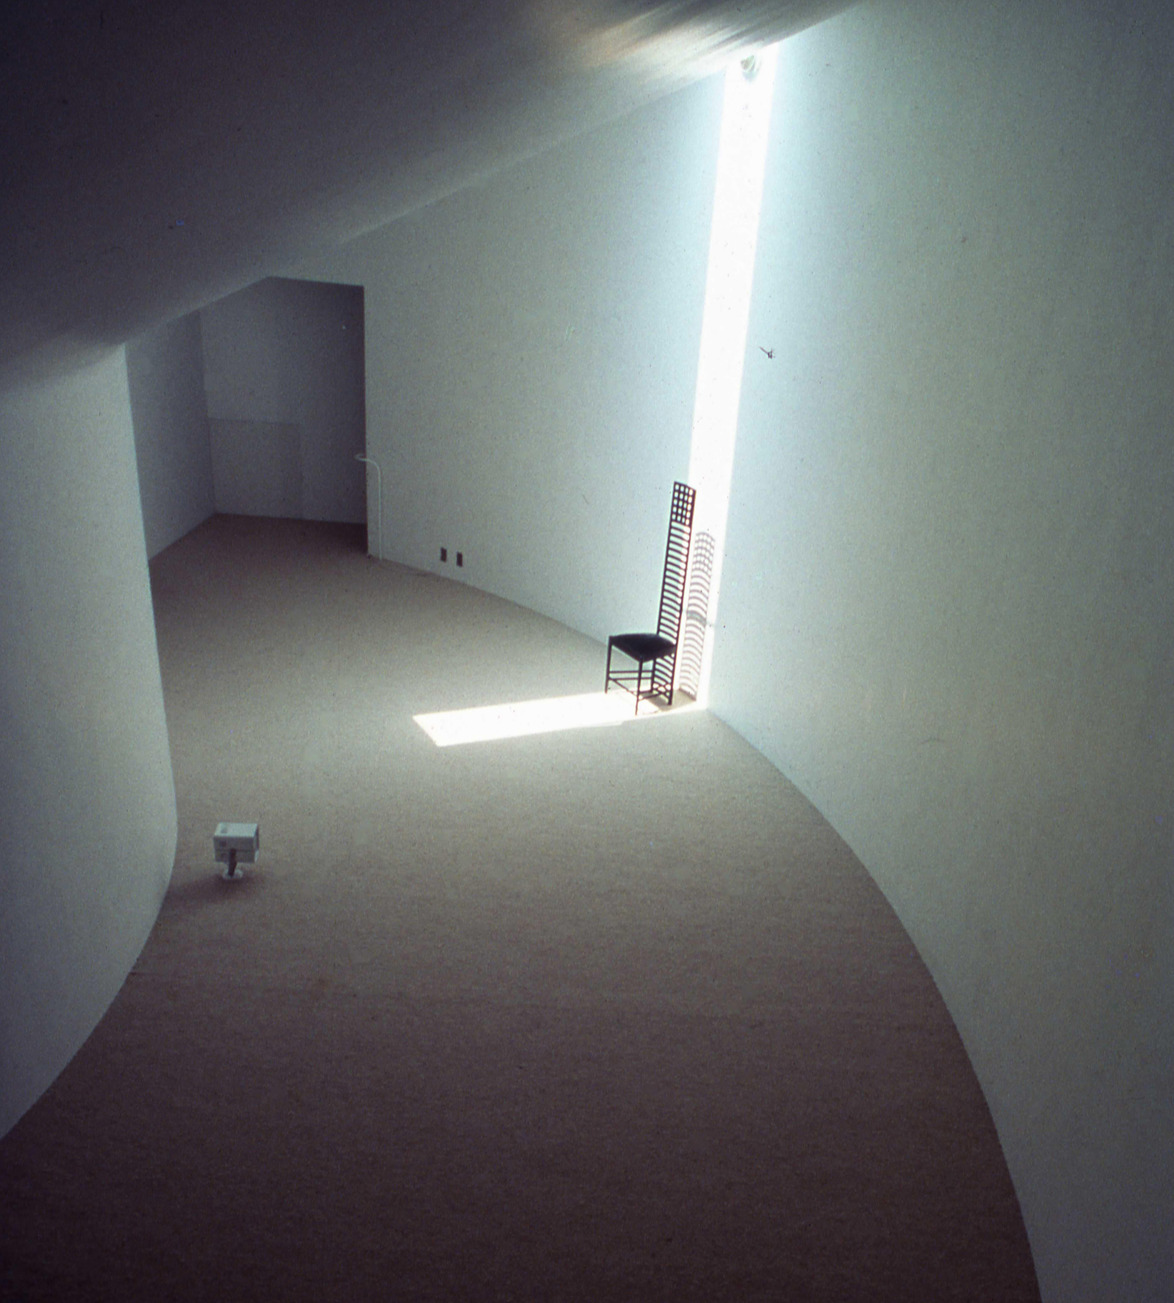 White U (Japan) Toyo Ito & Associates, Architects